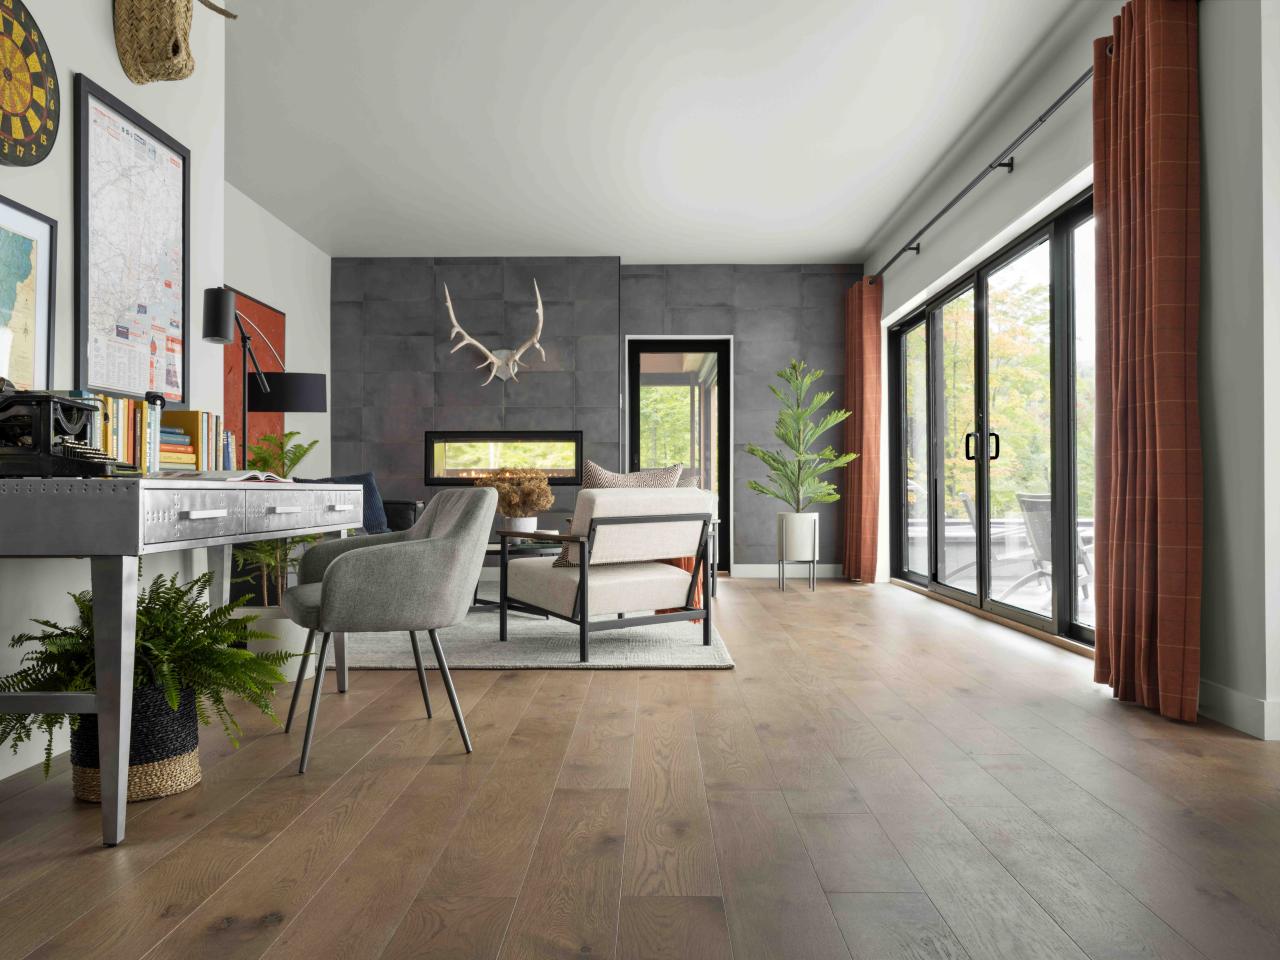 5 Best Kitchen Flooring Options for a Renovation - Bob Vila